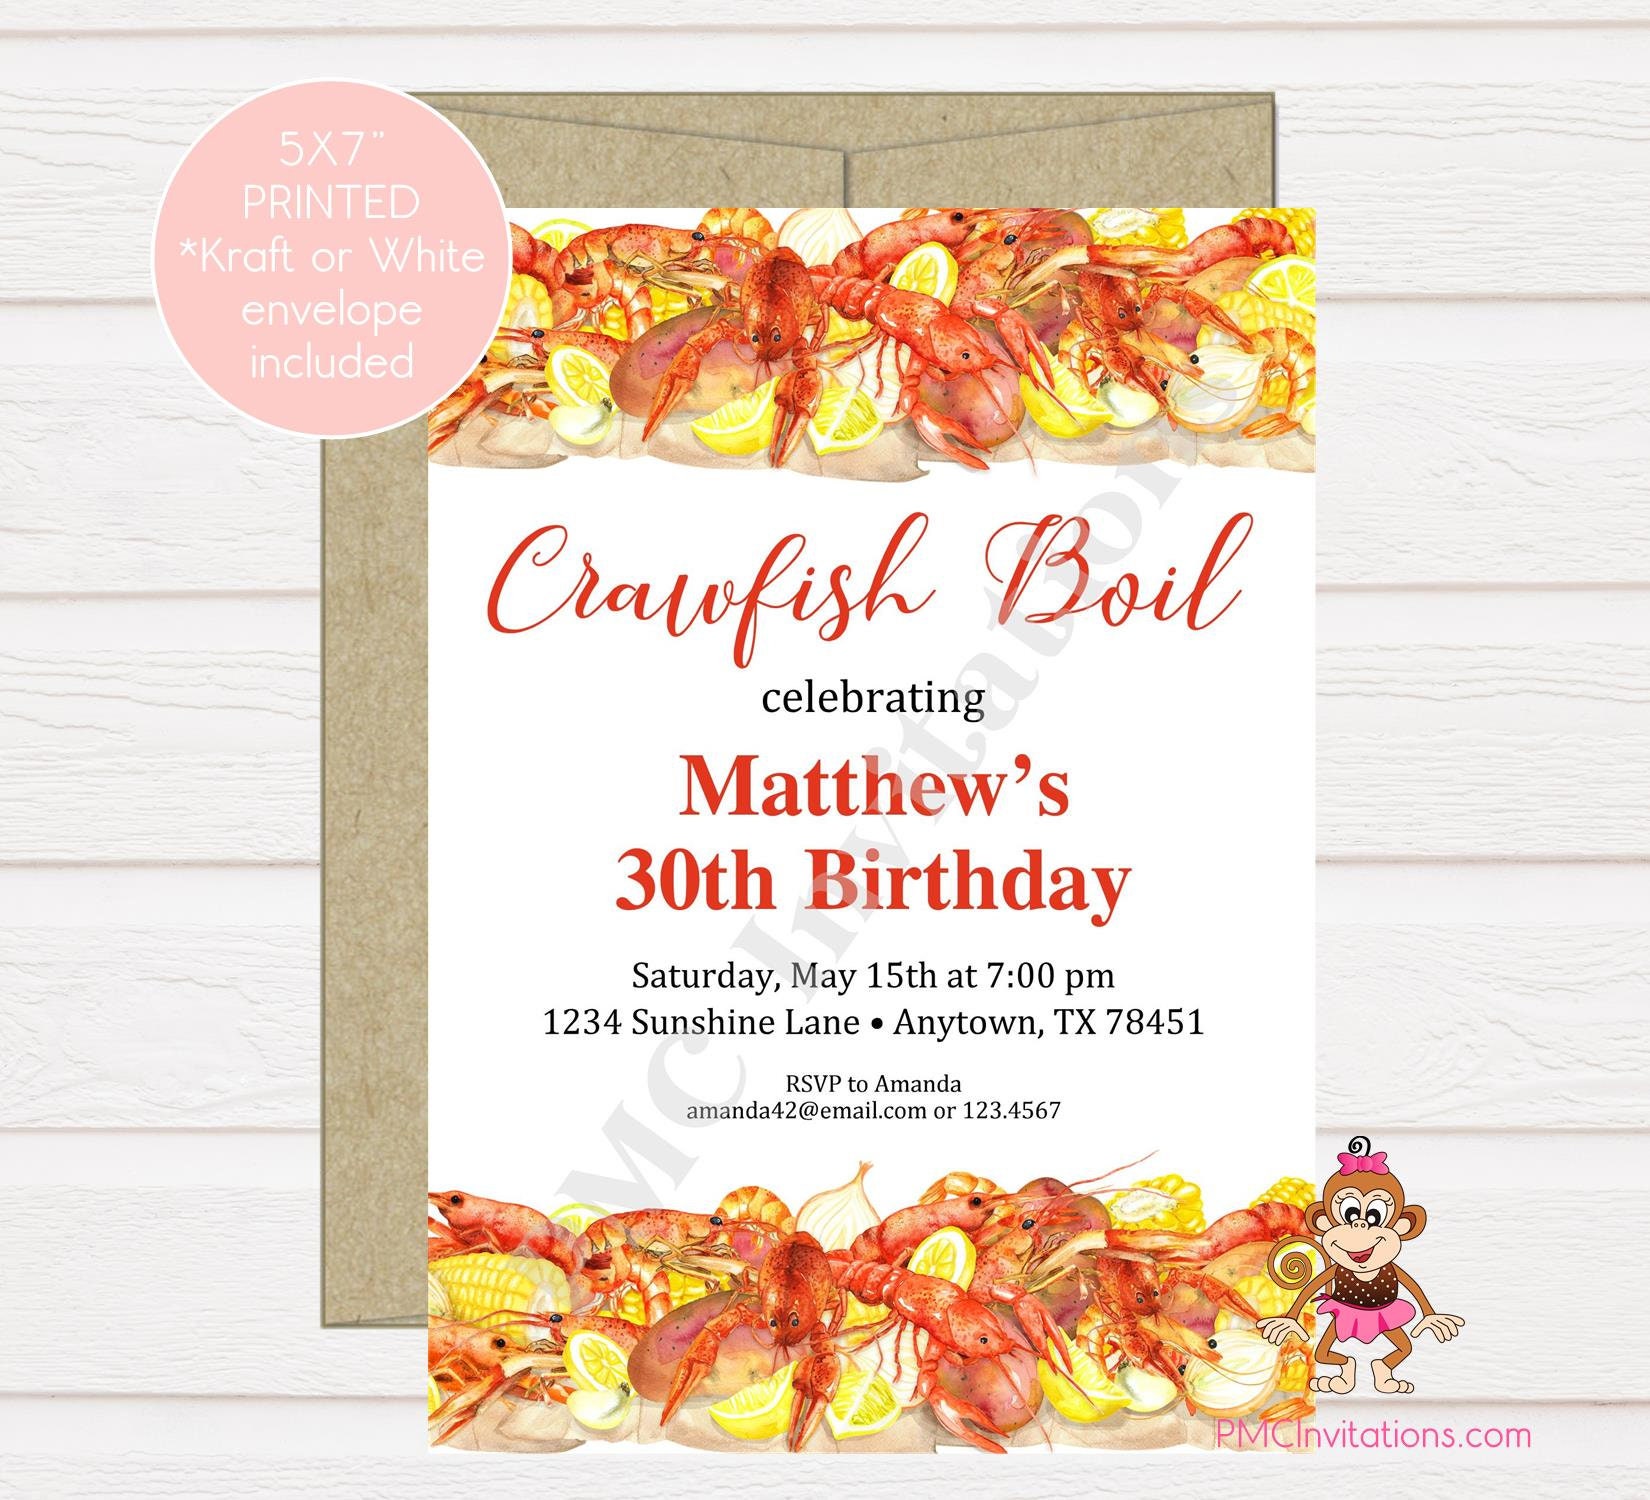 Custom Printed 5x7 Crawfish Boil Invitation, Crawfish, Cajun Seafood, Birthday, Baby Shower, Bridal Envelope Included